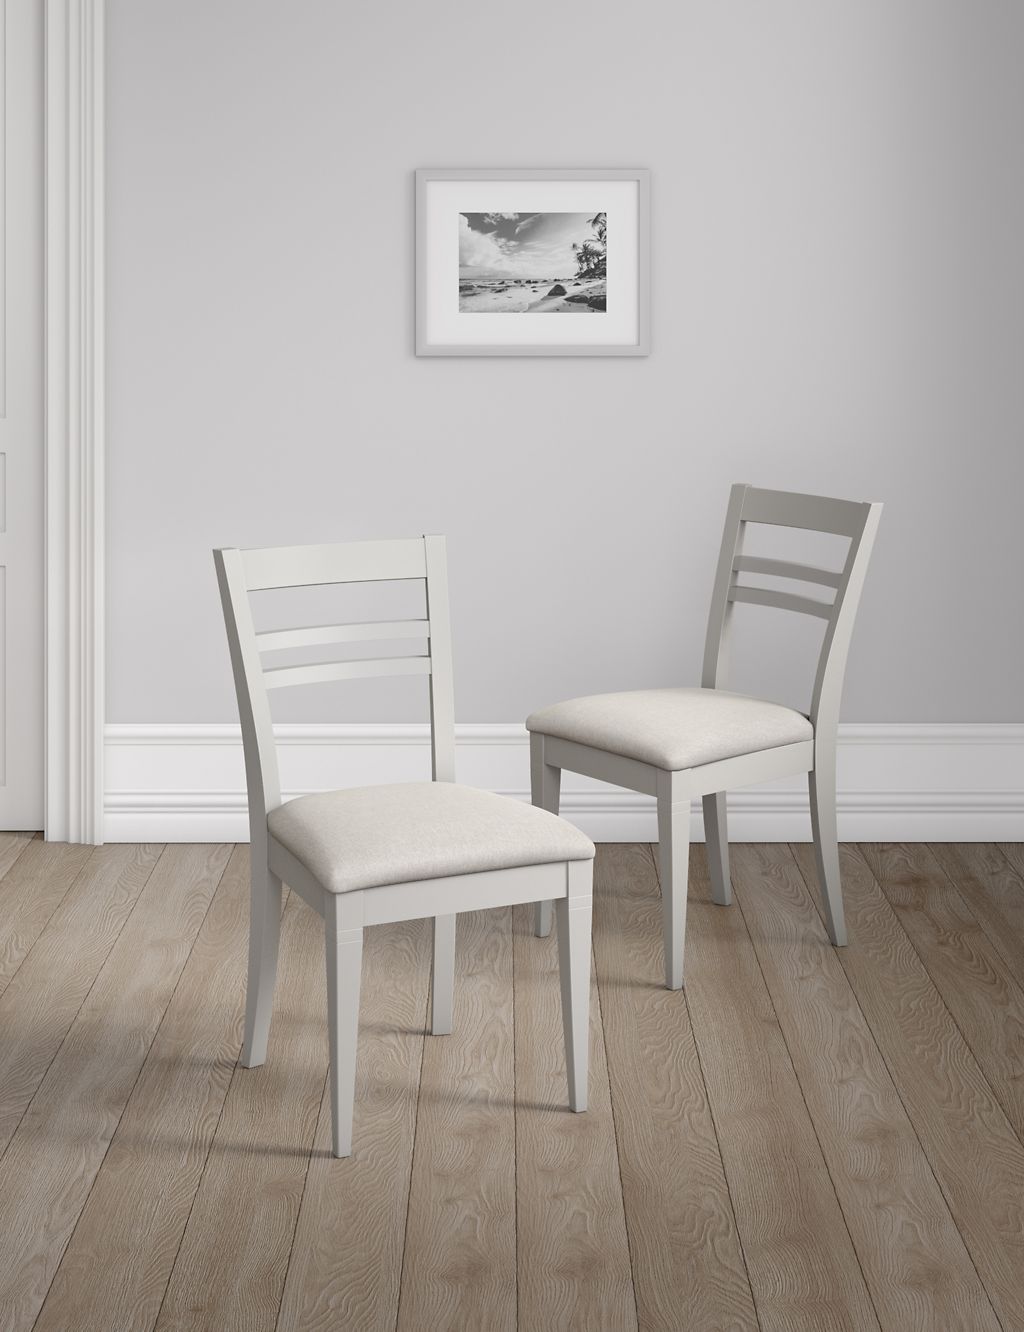 Set of 2 Sandbanks Dining Chairs 1 of 6